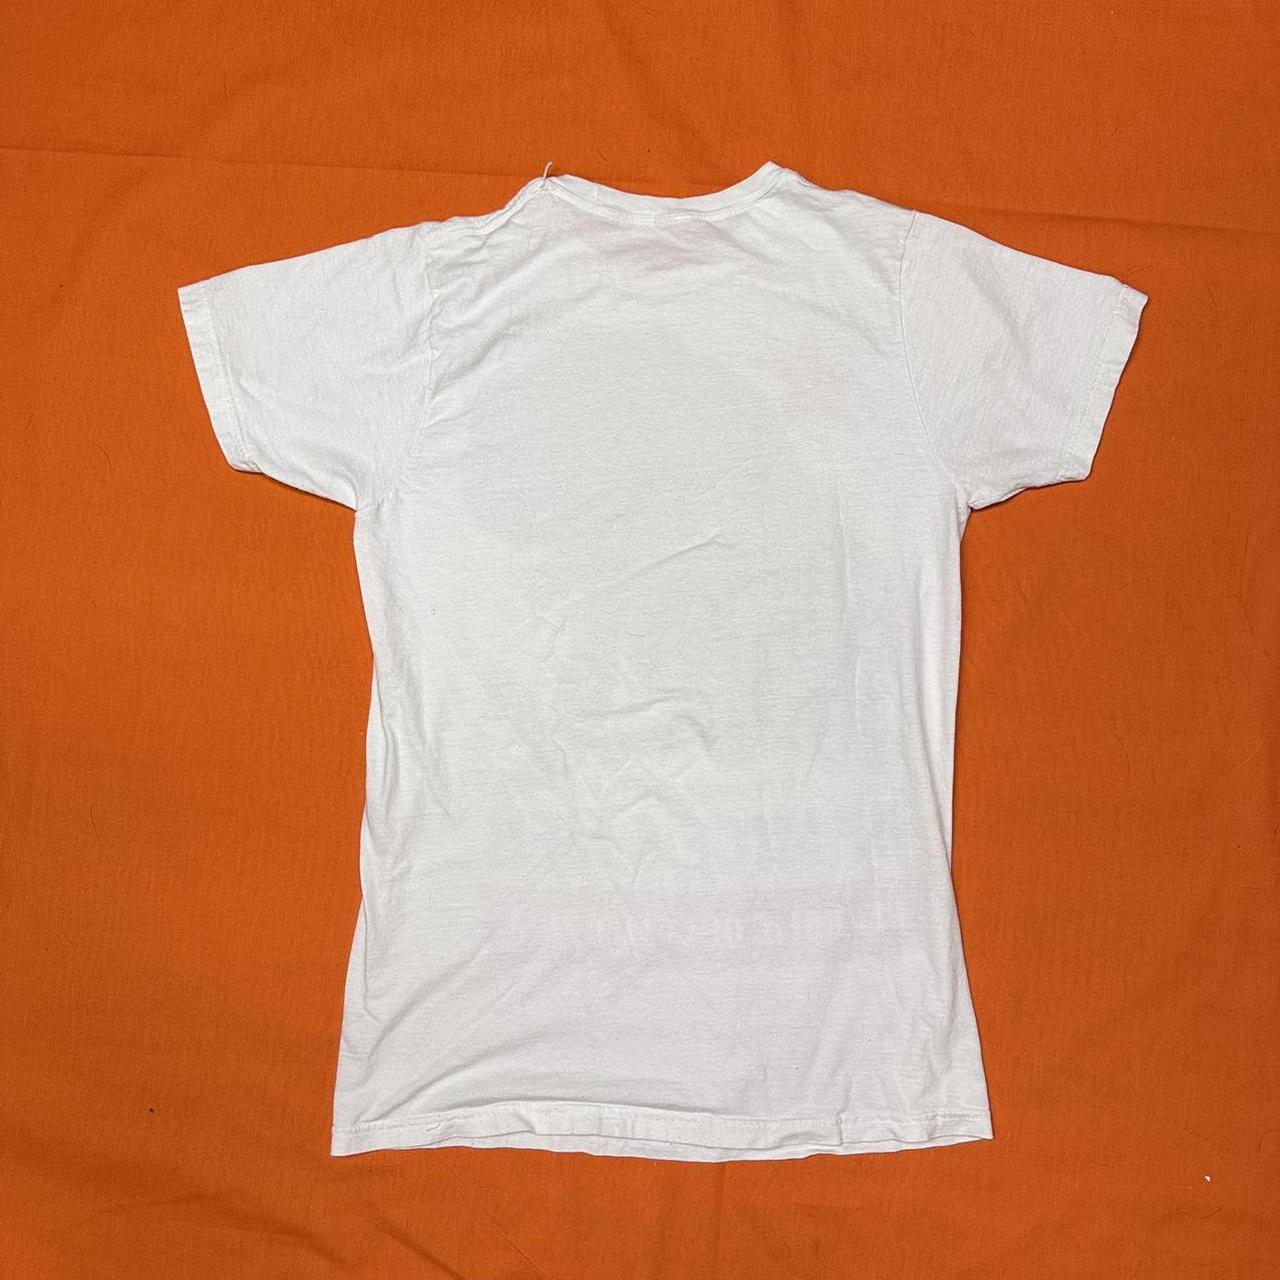 Hot Topic Men's White T-shirt (4)